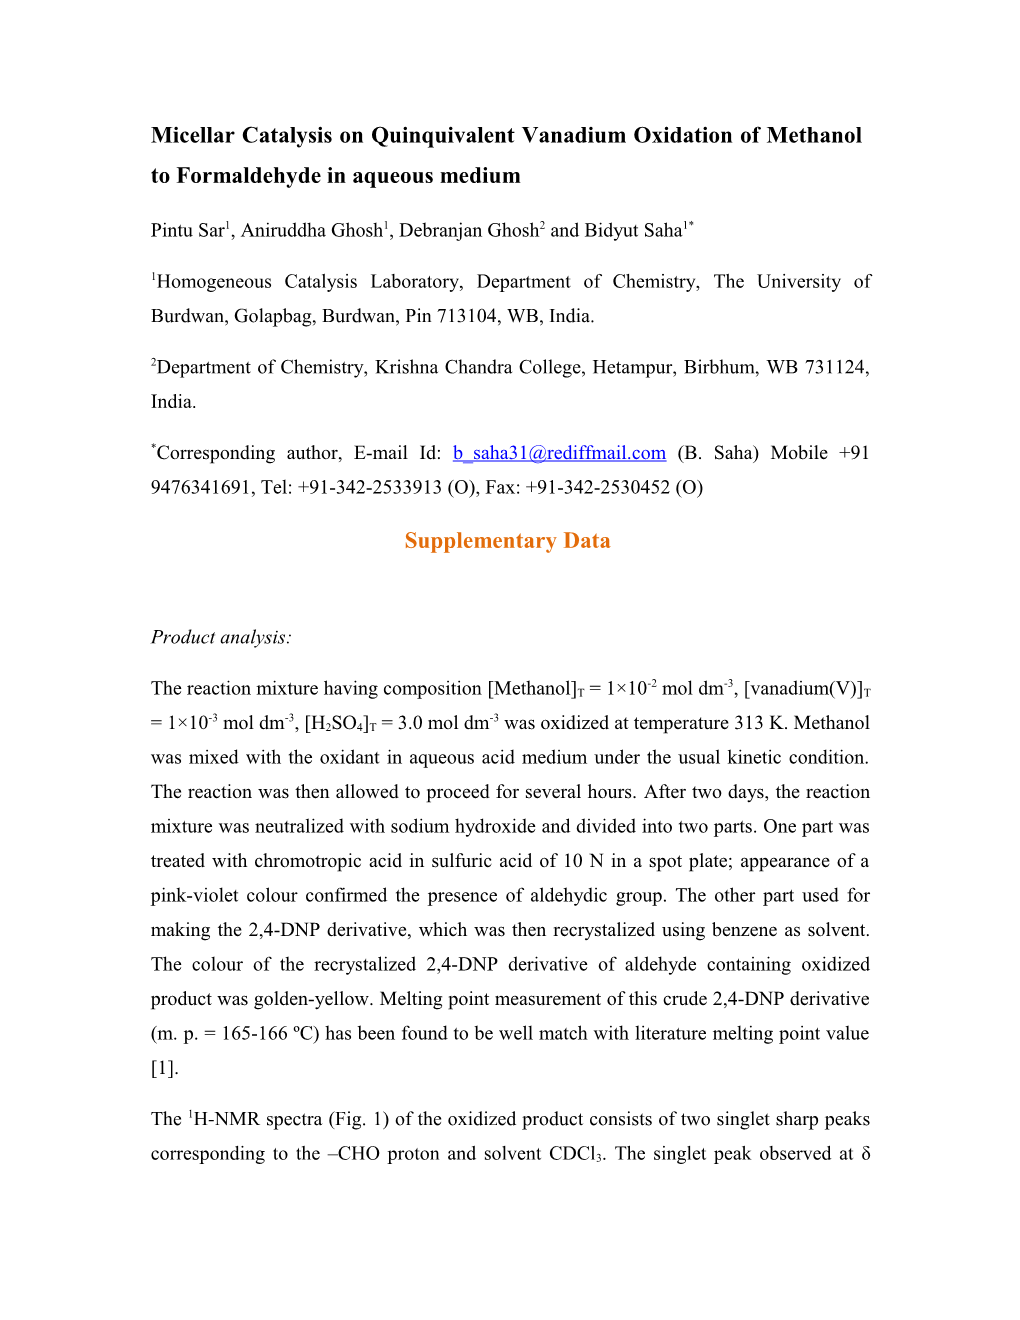 Kinetics and Mechanism of Quinquivalent Vanadium Oxidation of Methanol Catalyzed by Micellar